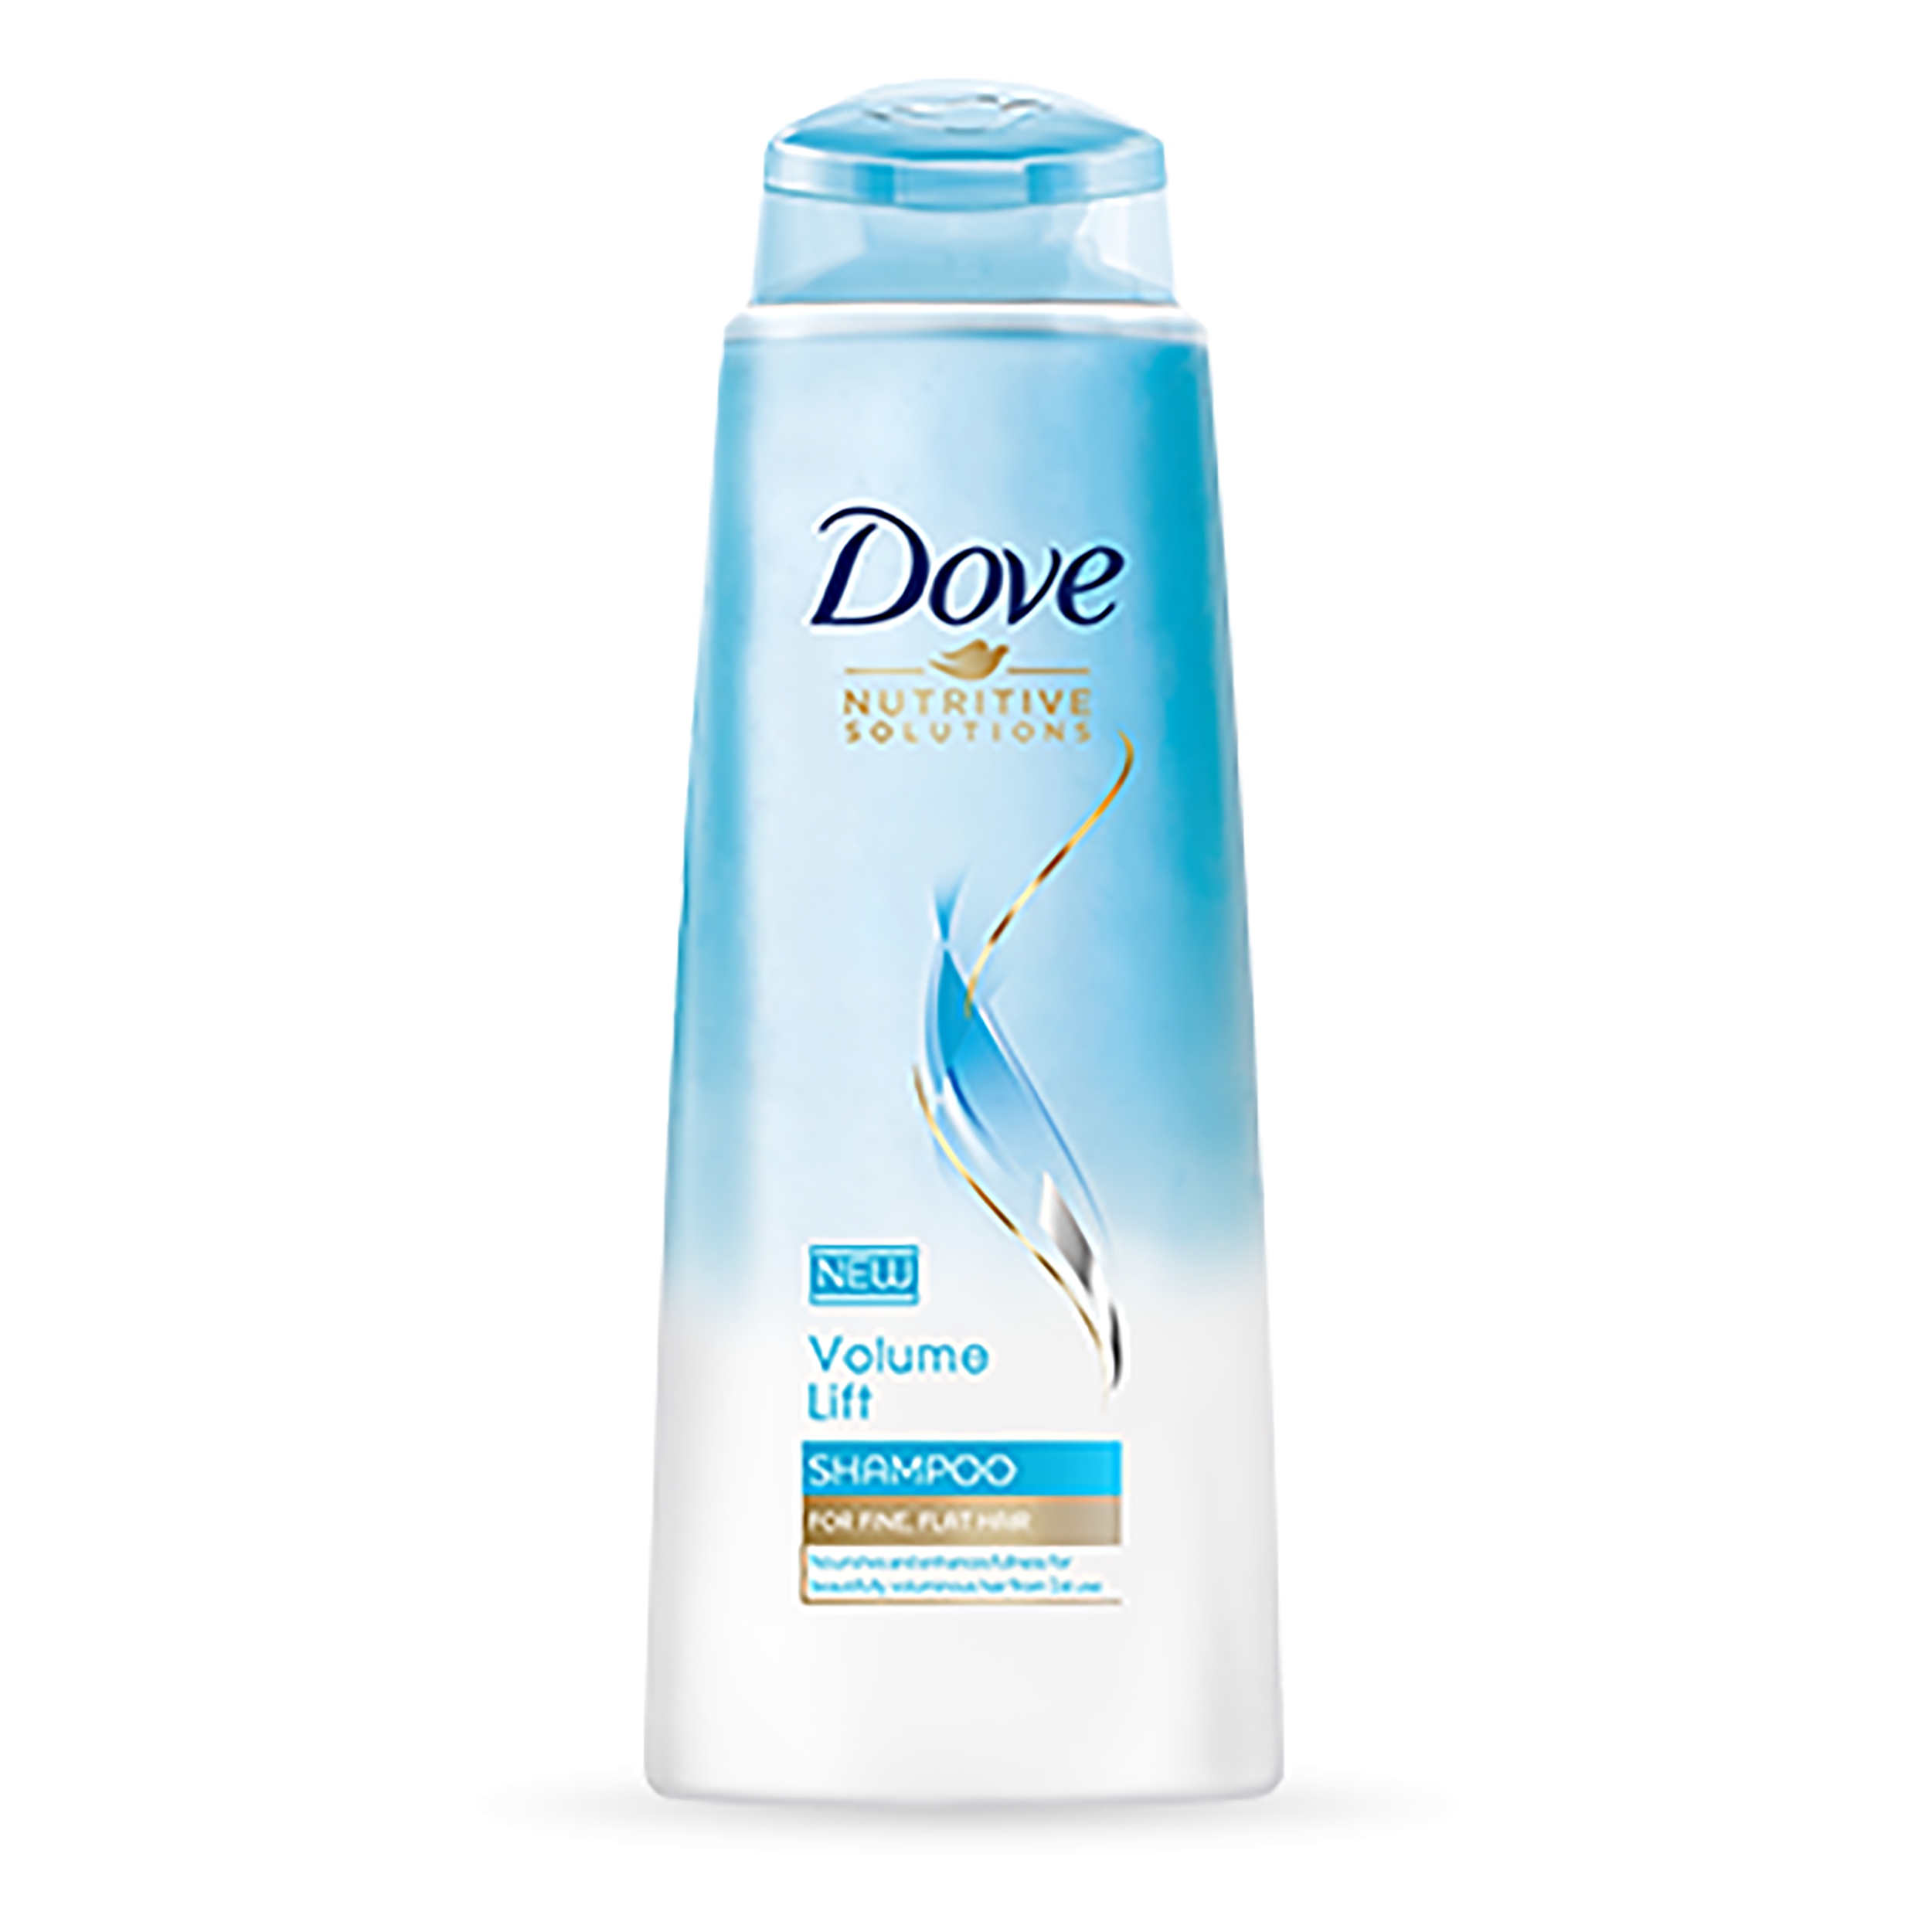 szampon dove volume lift